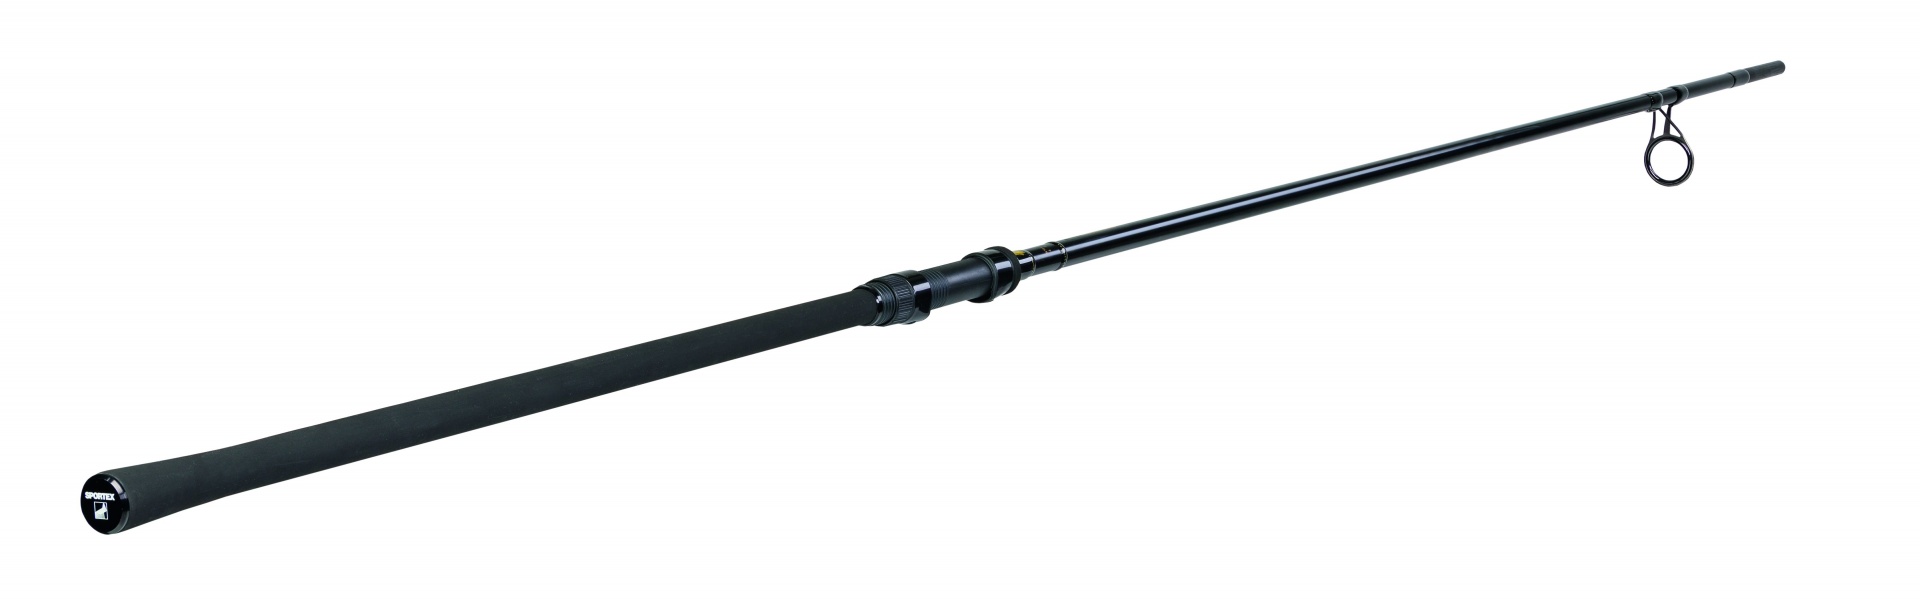 Sportex Advancer Carp Rod